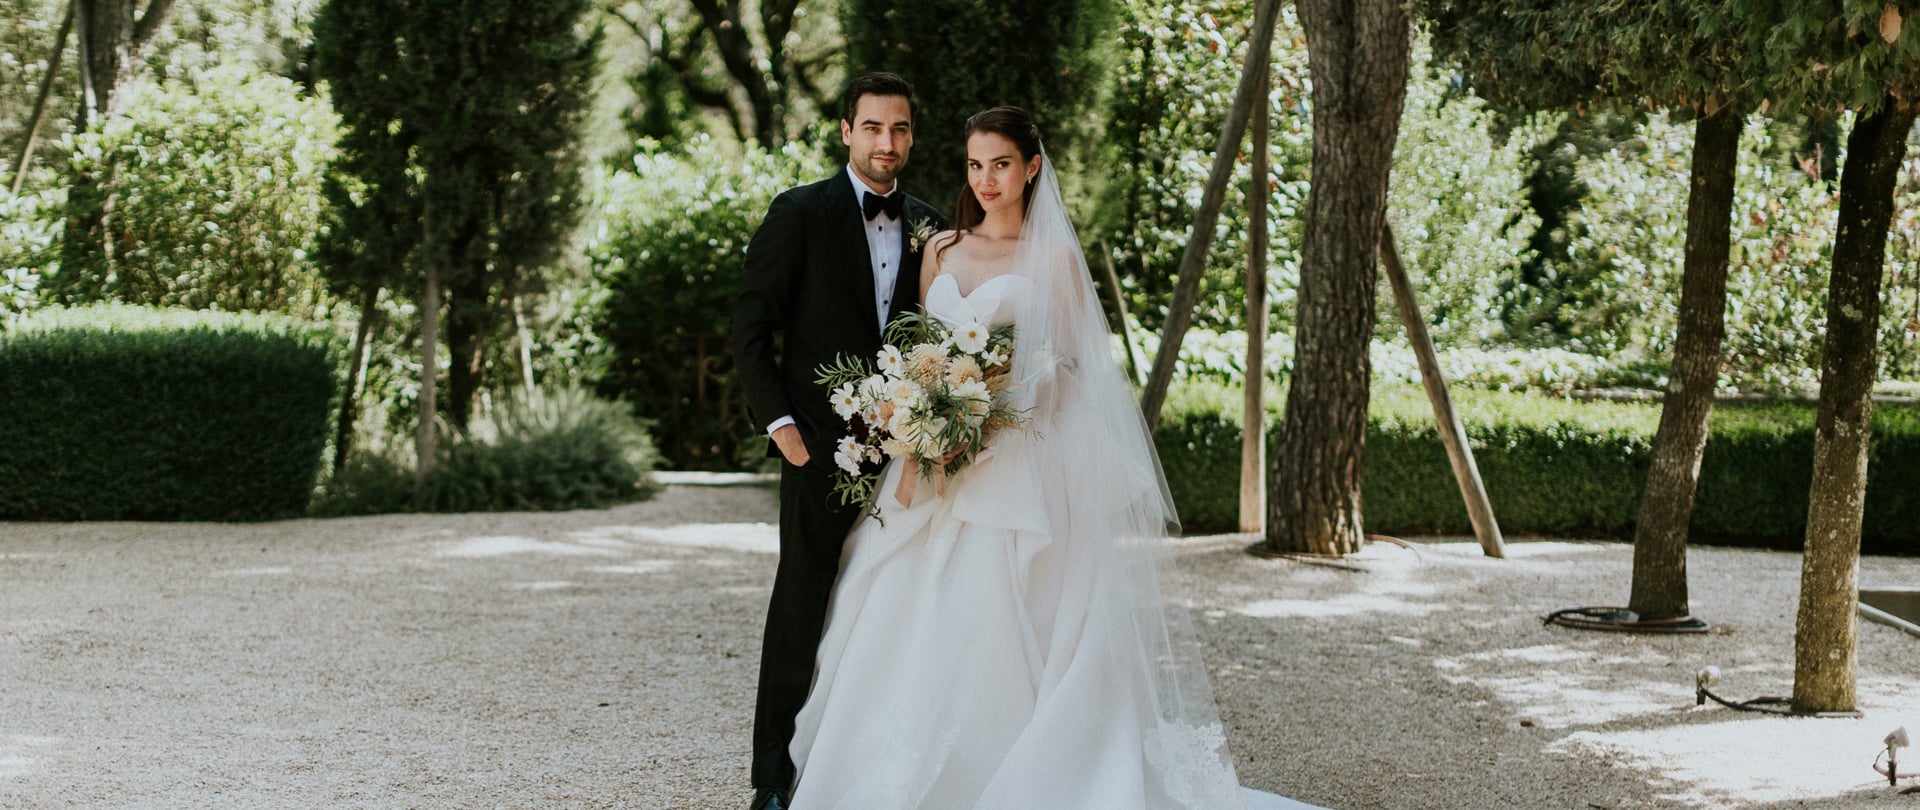 Meghan & Danny Wedding Video Filmed at Tuscany, Italy